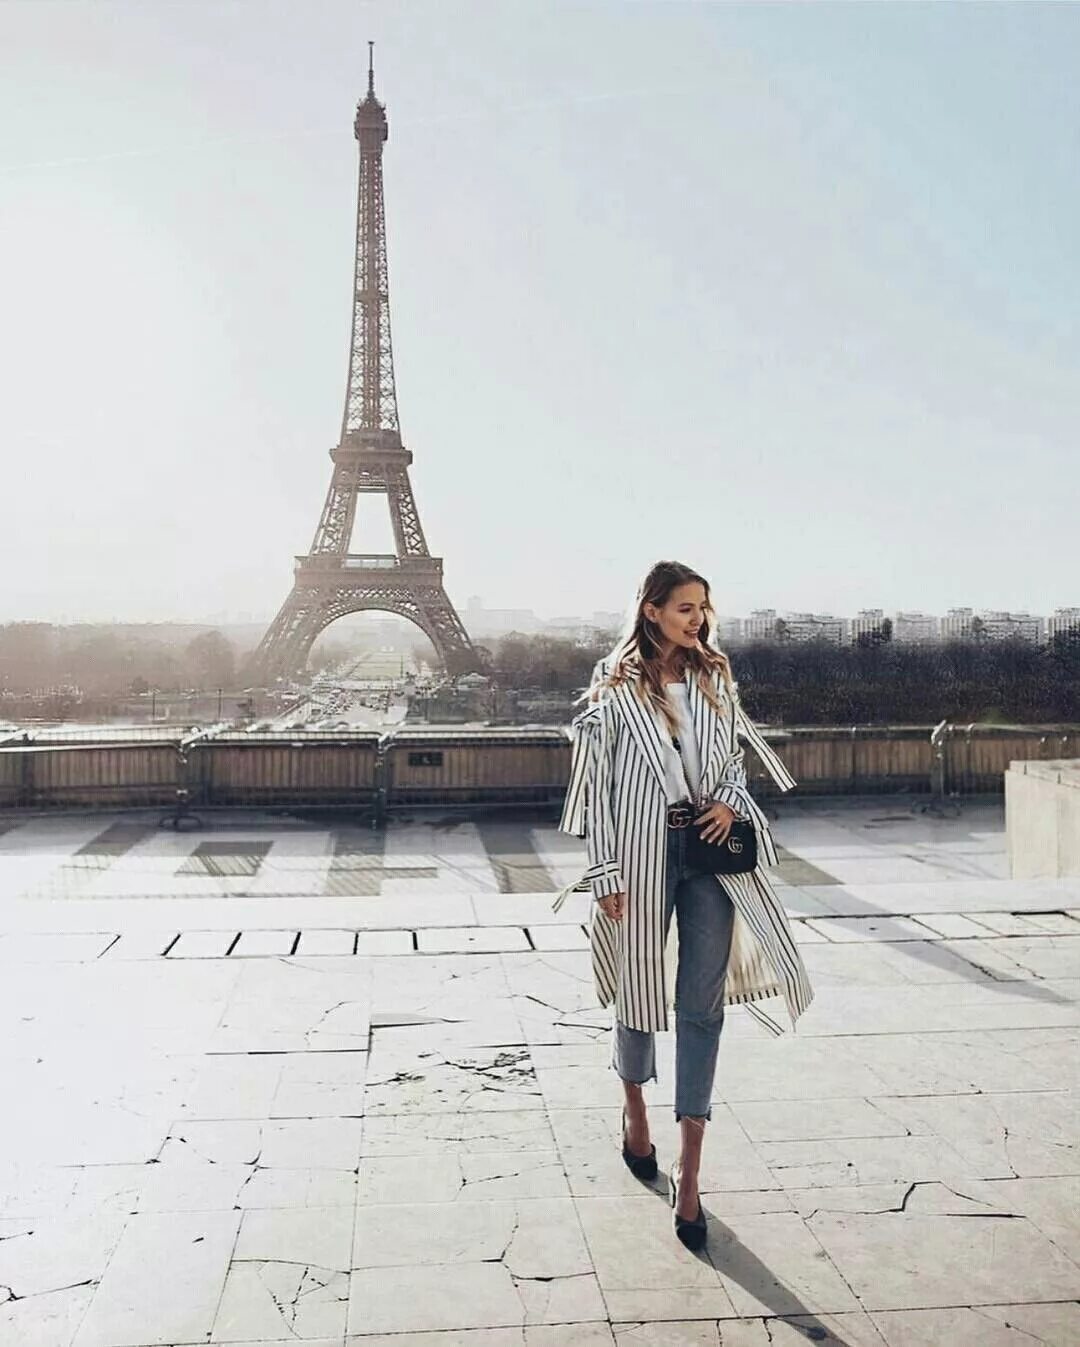 Фотосессия в стиле Париж. Поездка в Париж образ. Образ для прогулки по Парижу. Французская мода. Скучаю по парижу